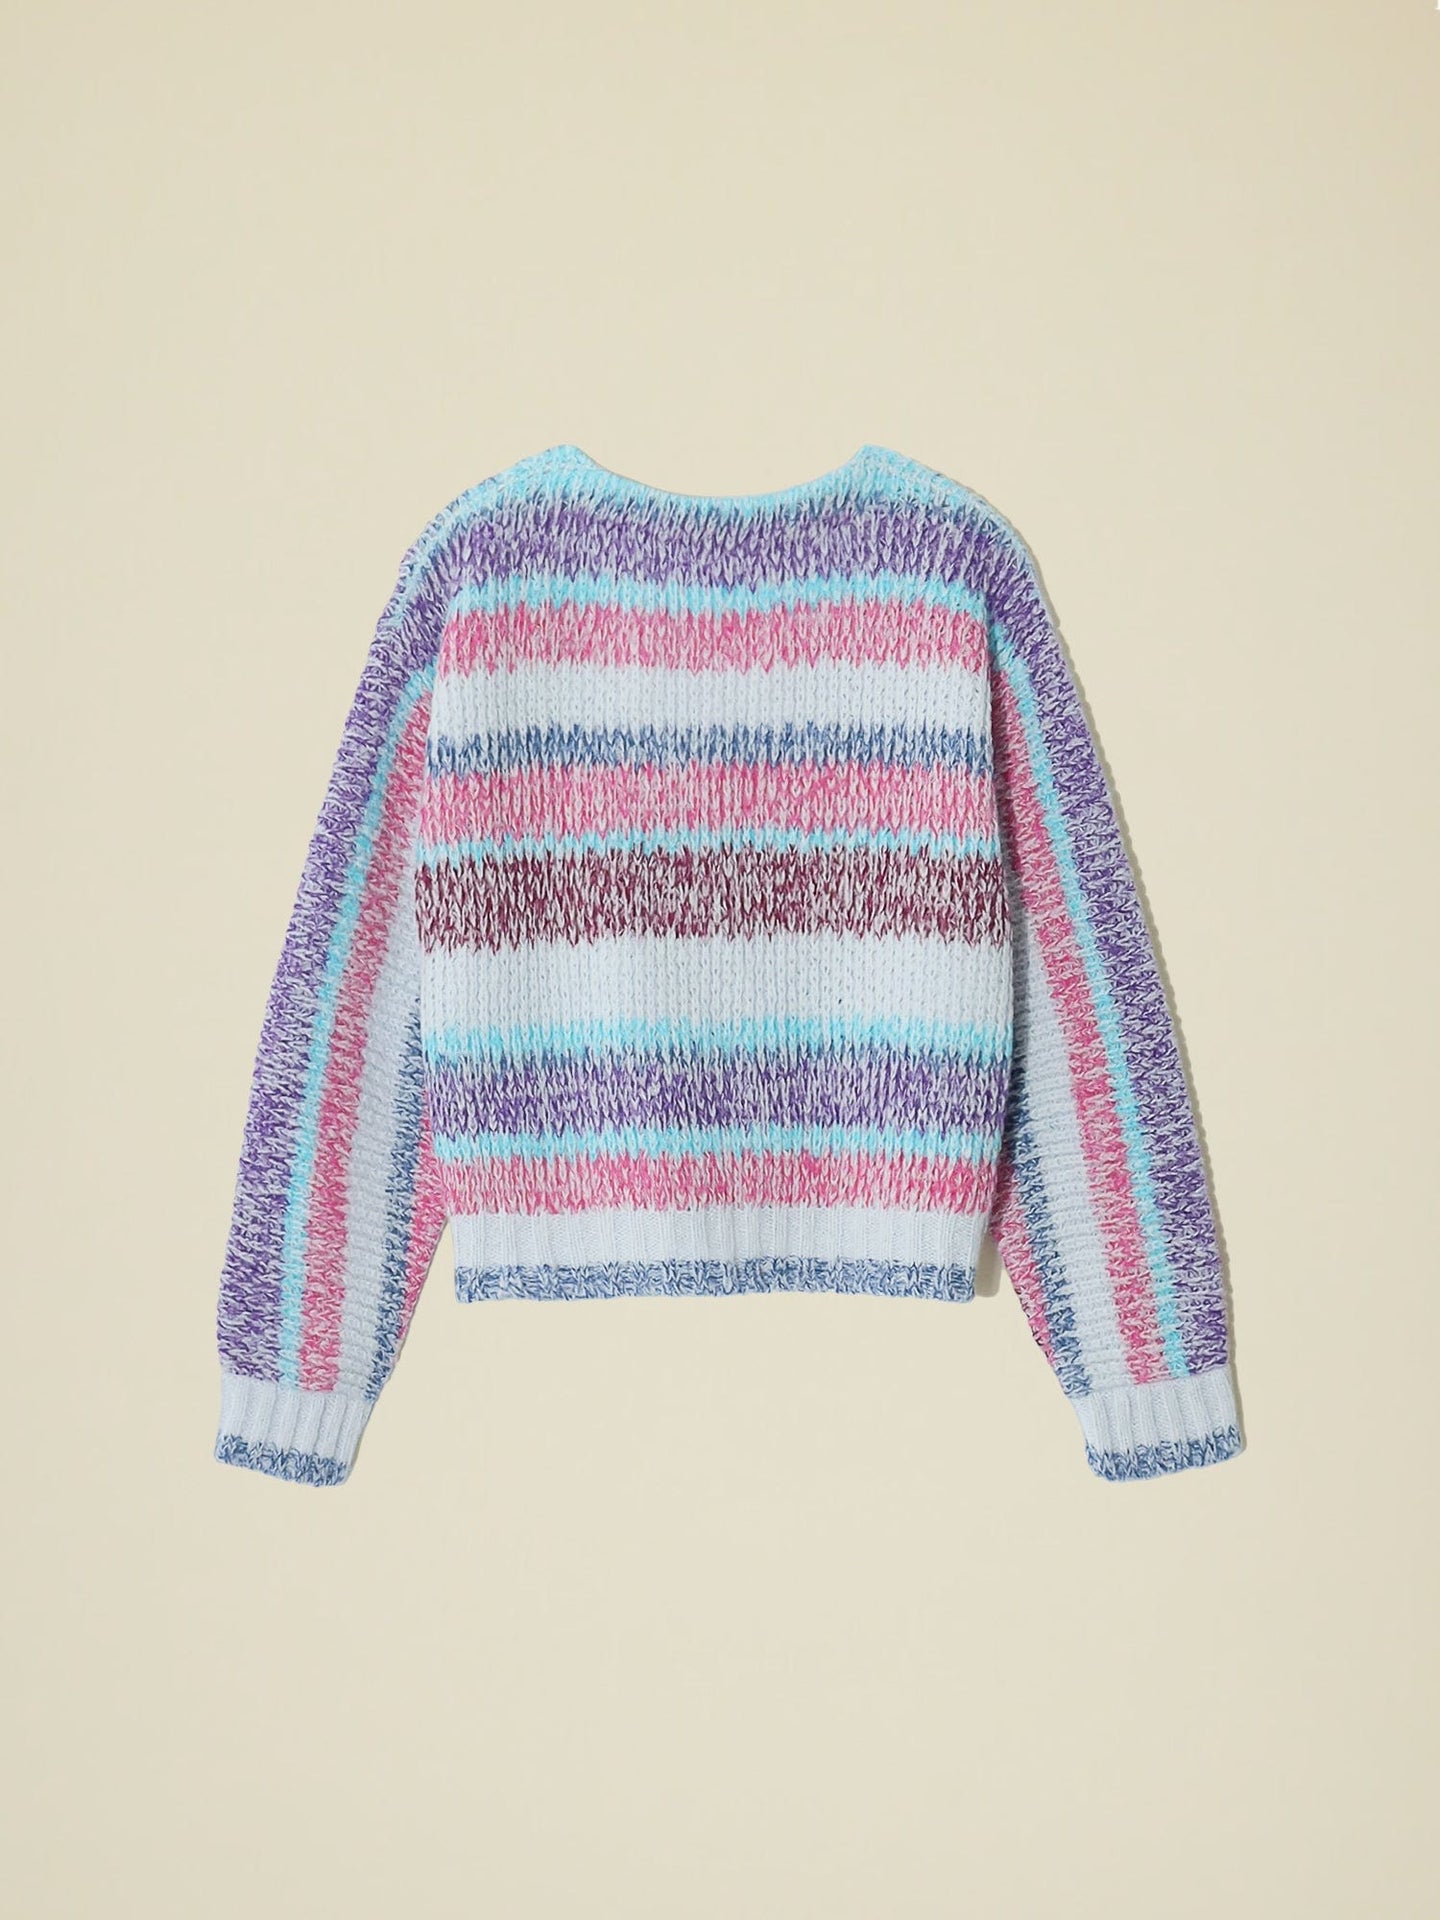 Xirena Sweater Blue Sunset Laramie Sweater